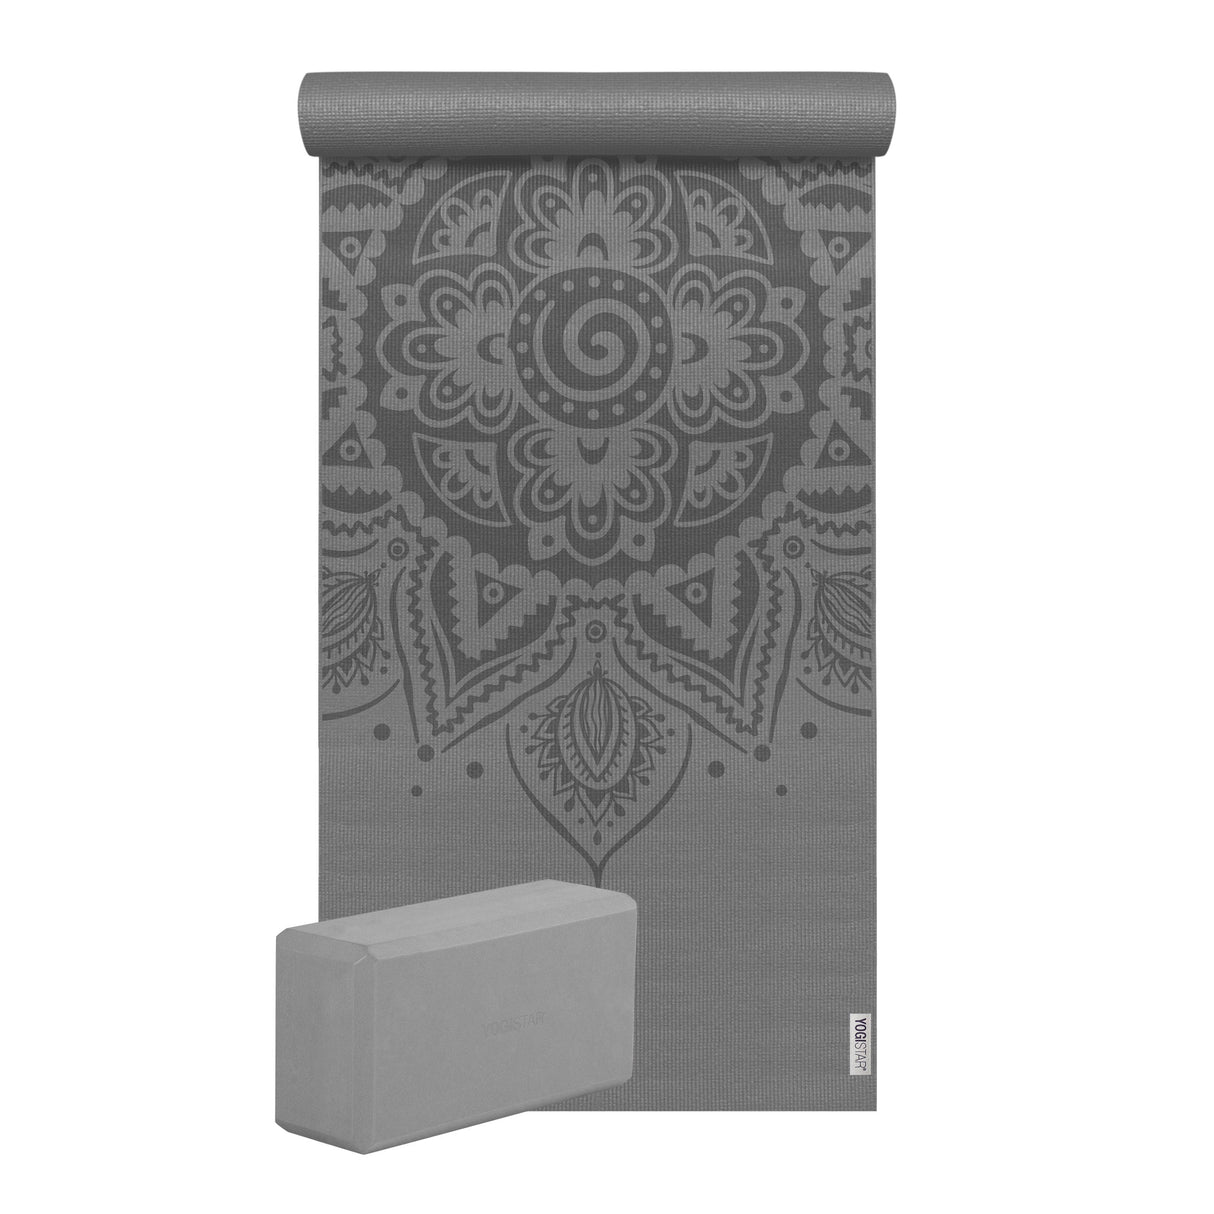 Yoga-Set Starter Edition - spiral mandala (Yogamatte + 1 Yogablock) - graphit